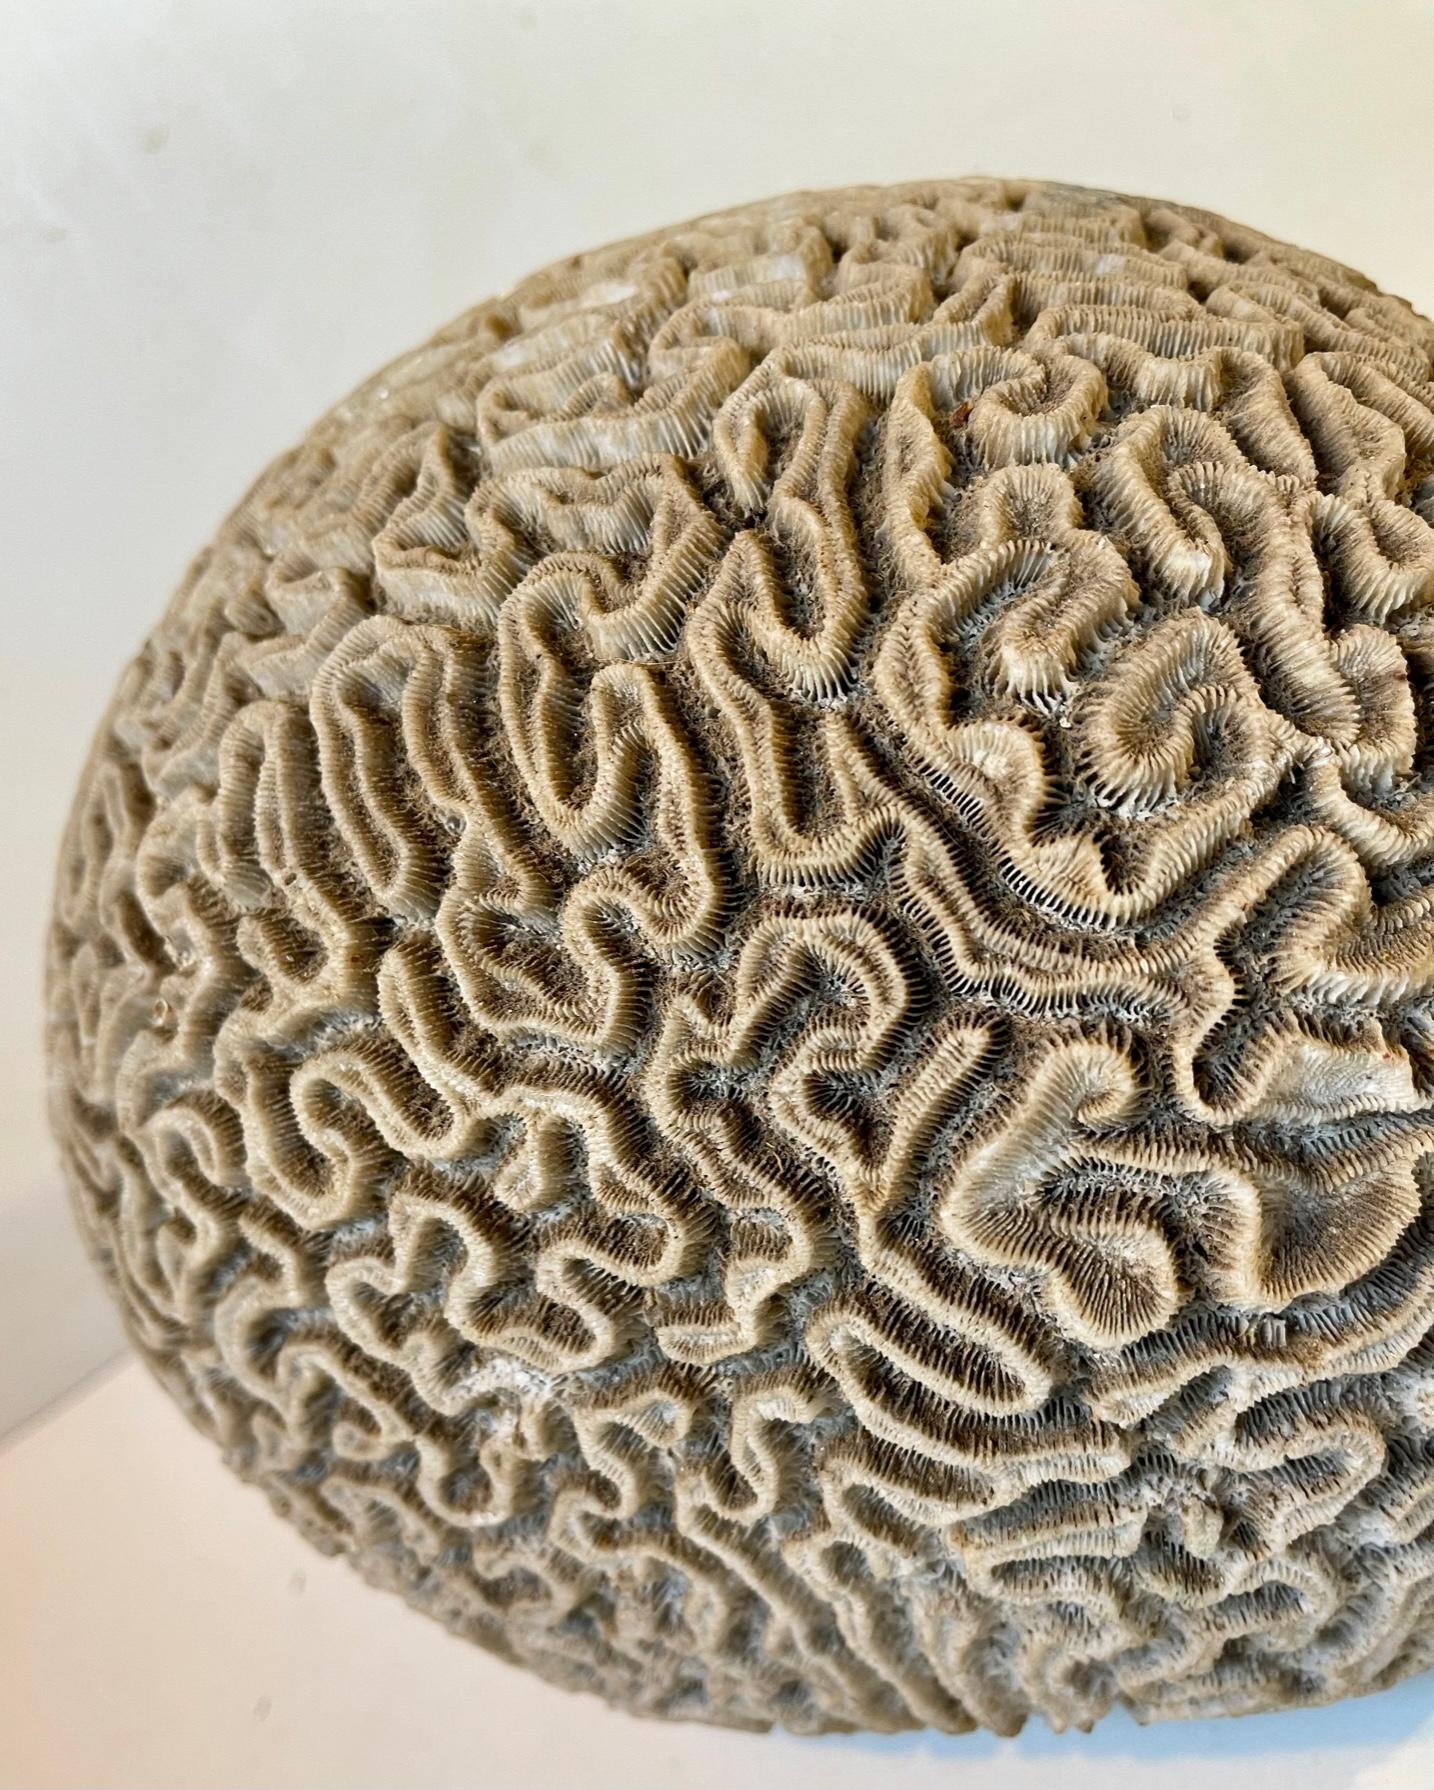 corail fossilise